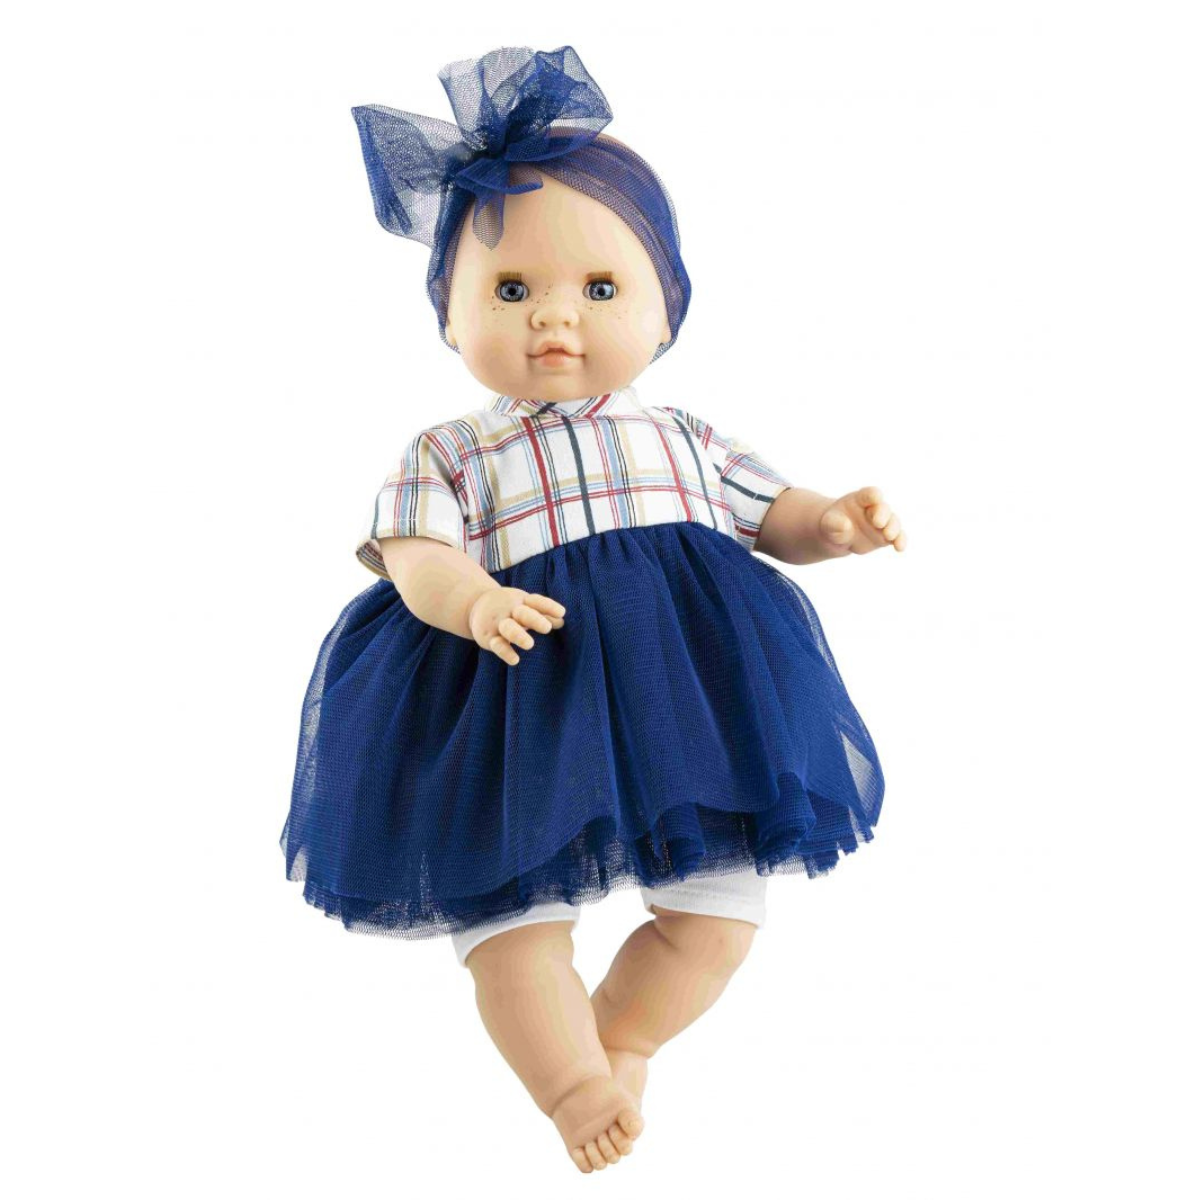 Spanish doll Bobas Paola Reina 07049